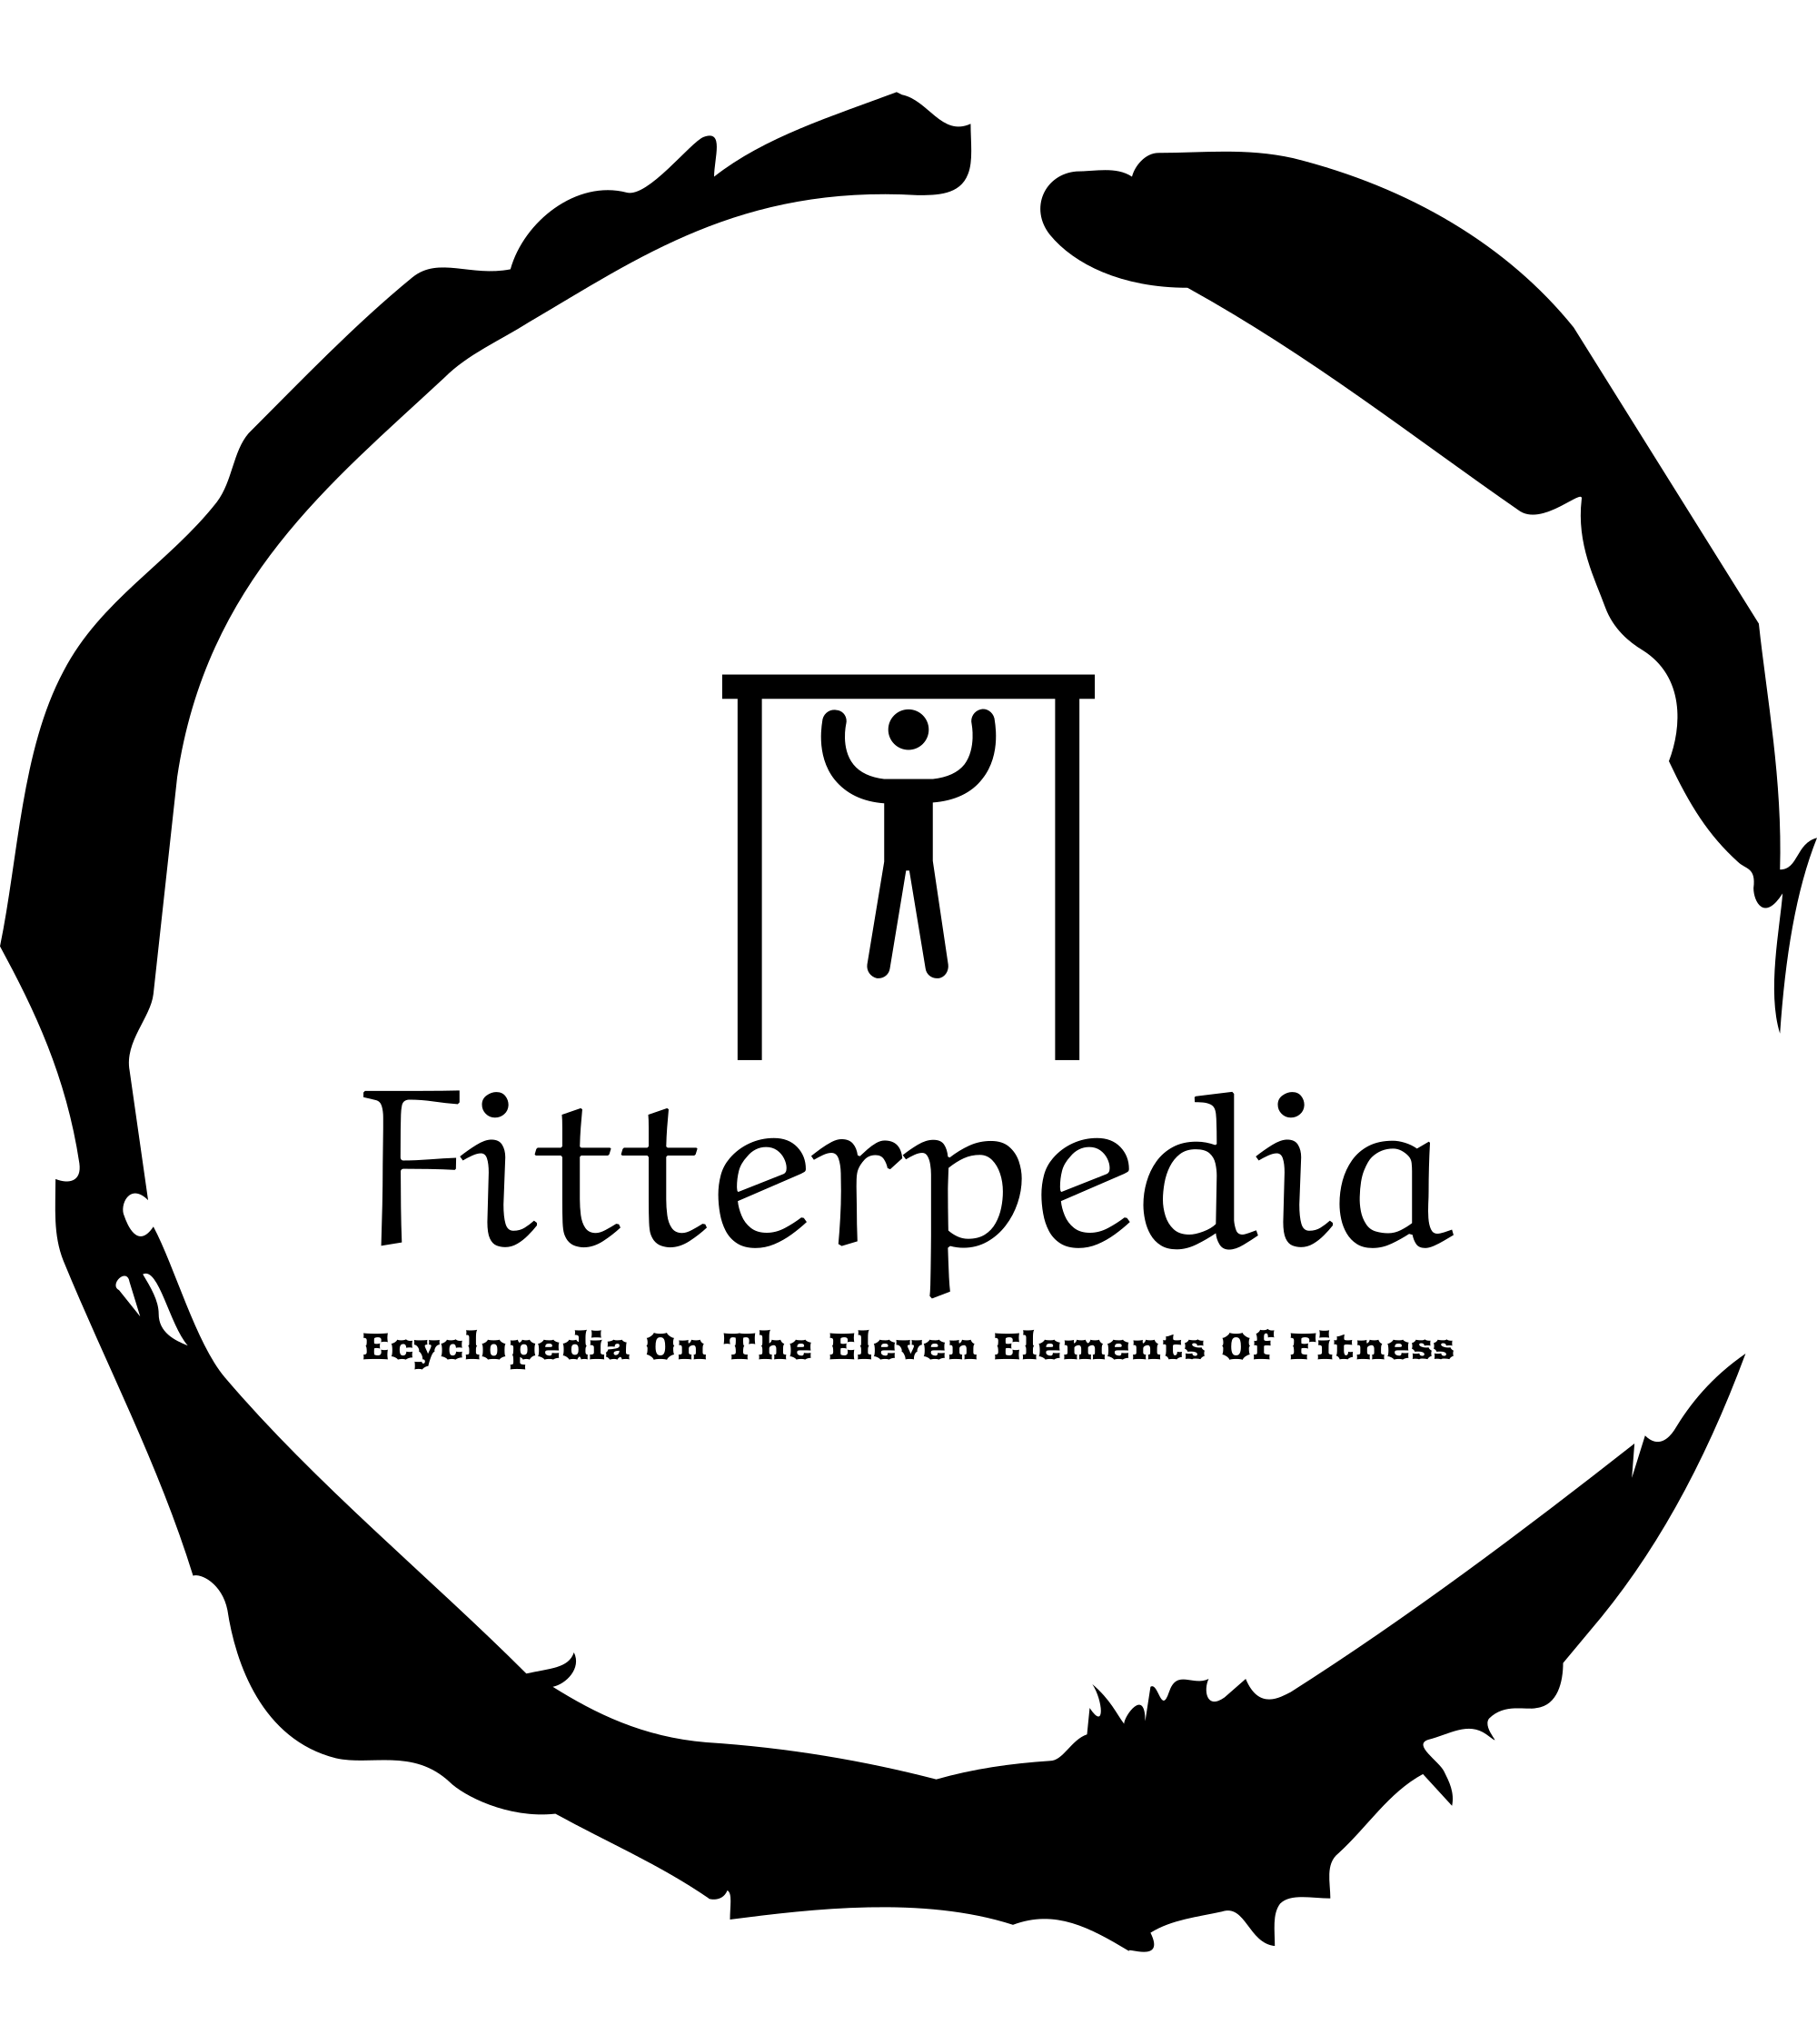 Fitterpedia